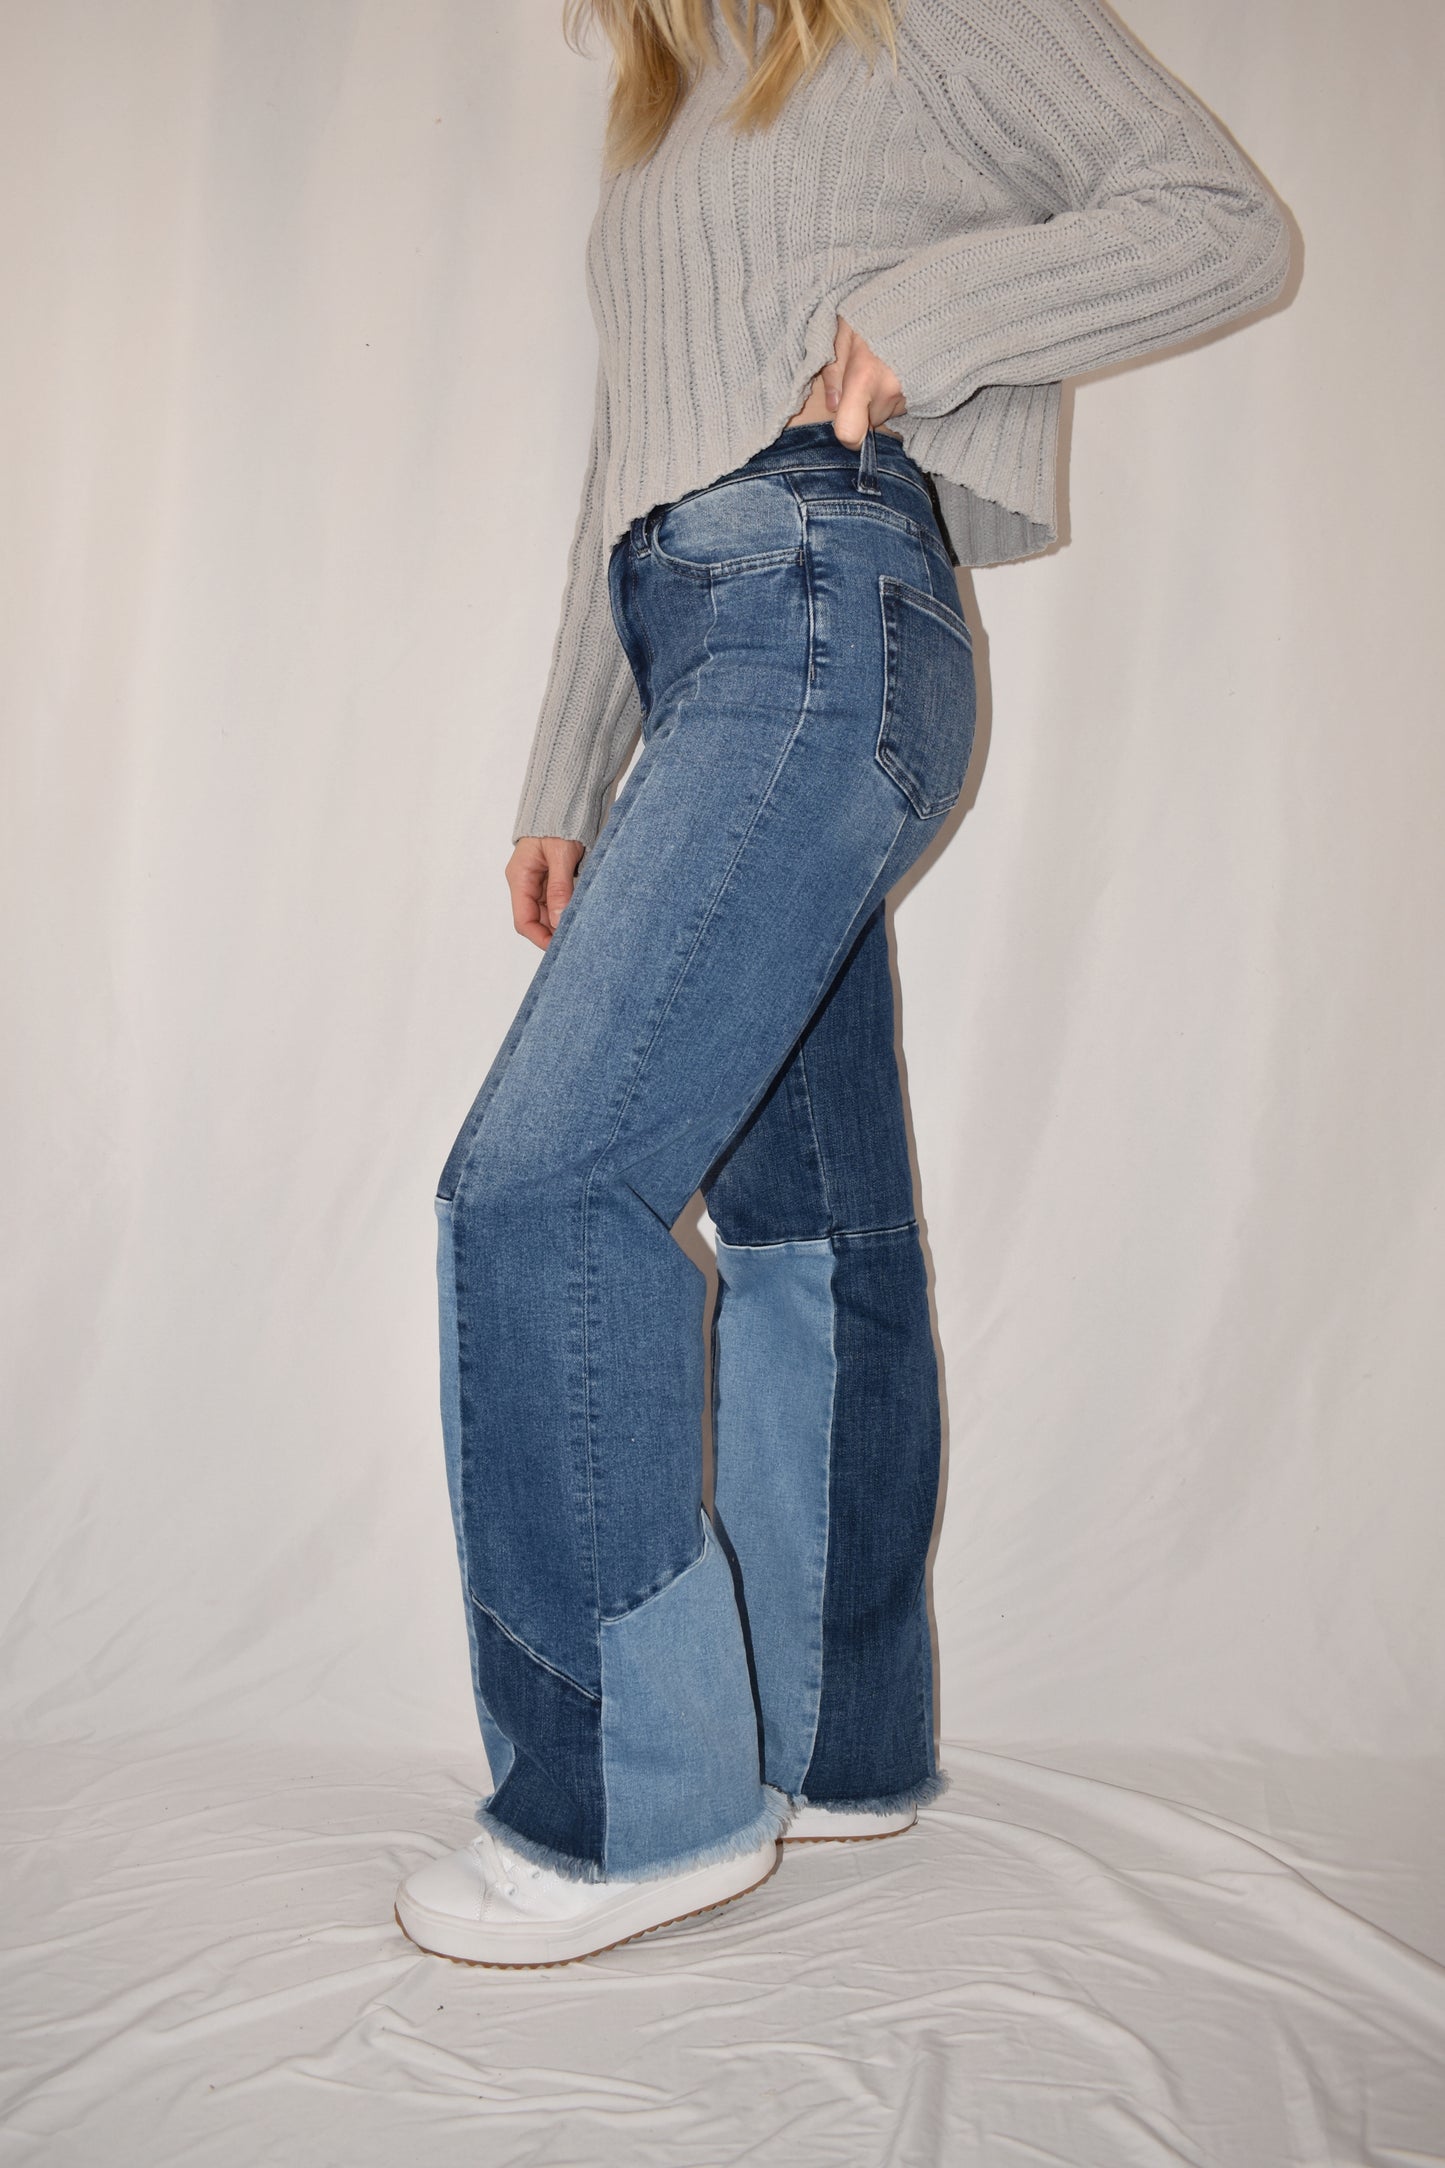 boyfriend/straight leg style jeans with stretch denim. Patchwork style ranging from medium to light wash. frayed hem, full length.